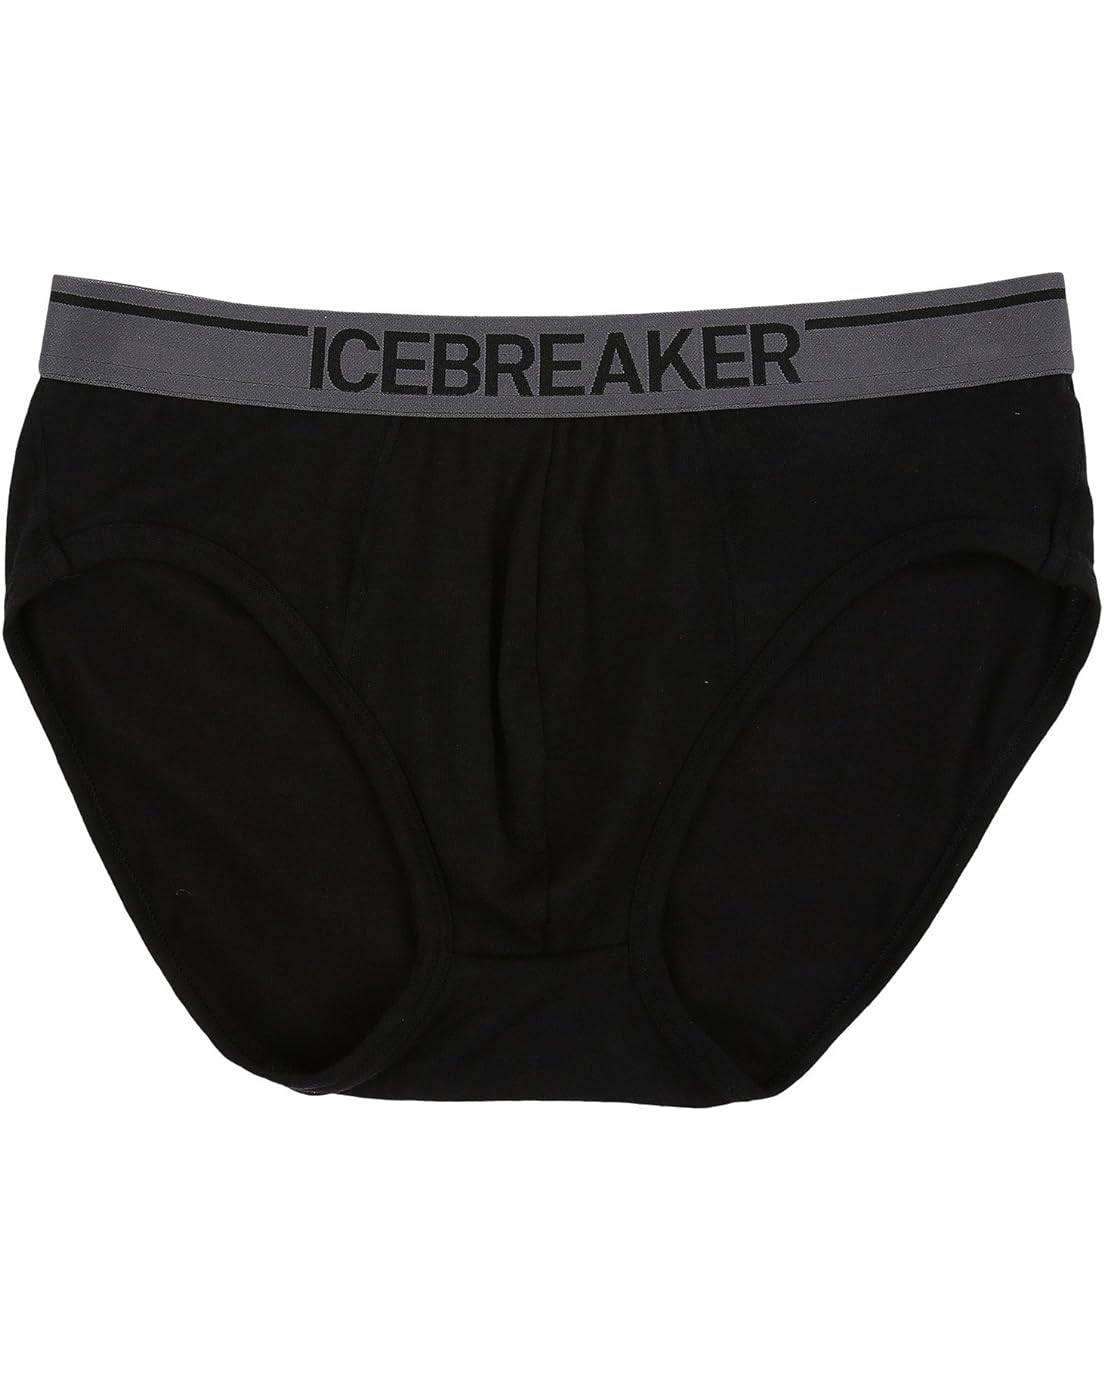 Icebreaker Anatomica Brief